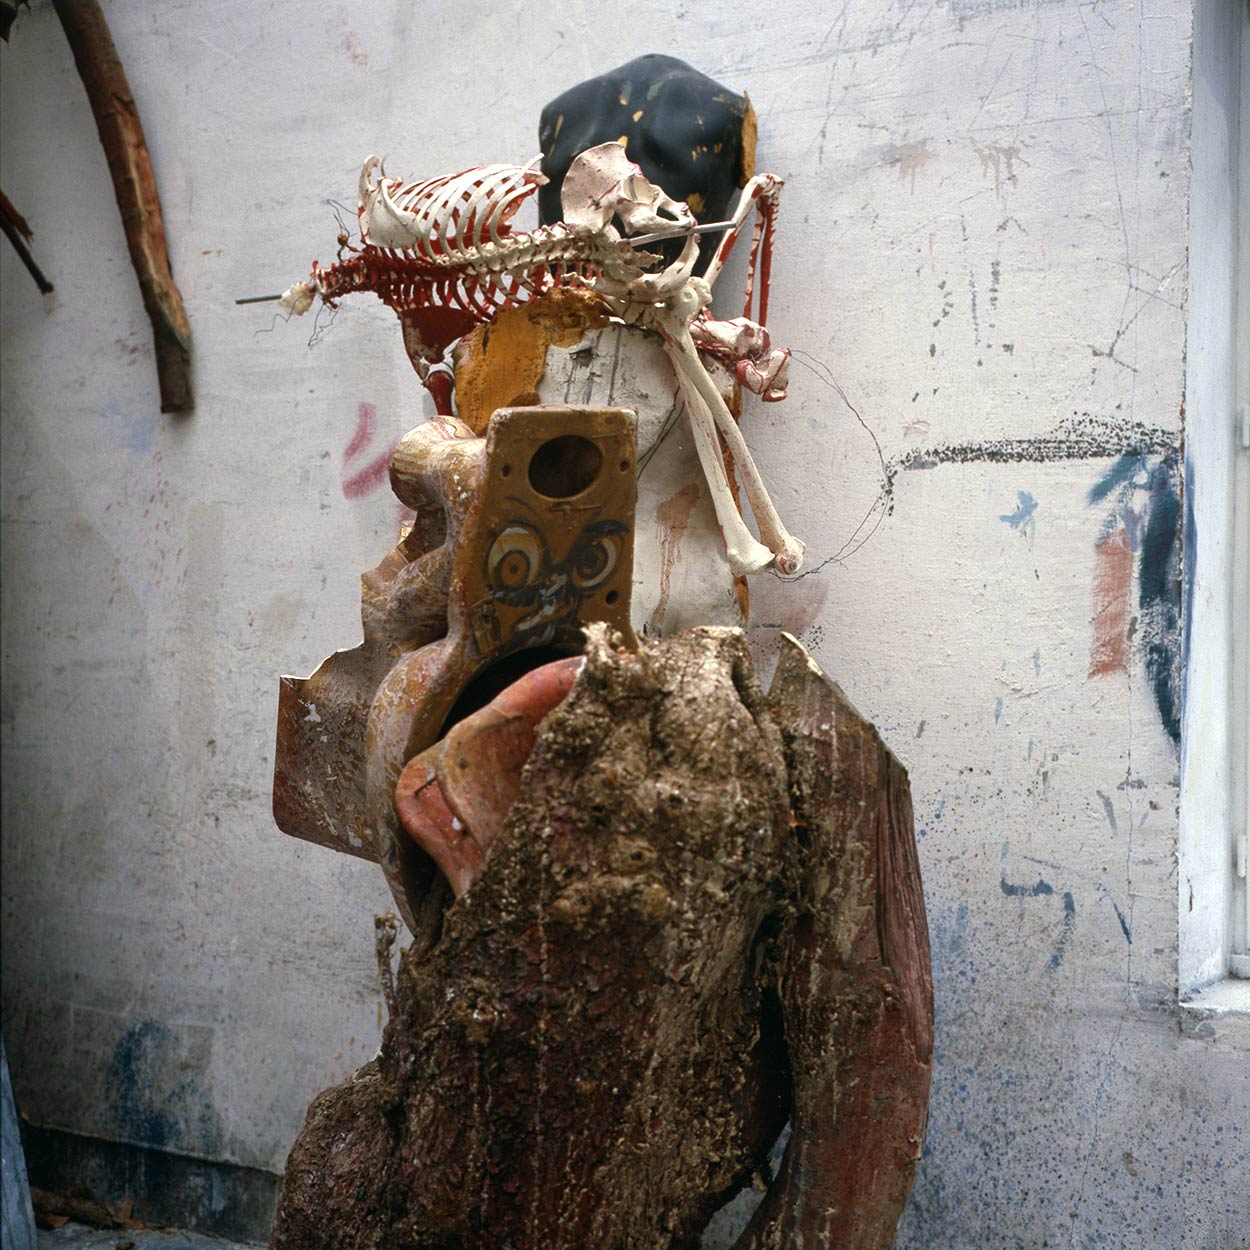 Sculptures at Dado’s studio in 1996